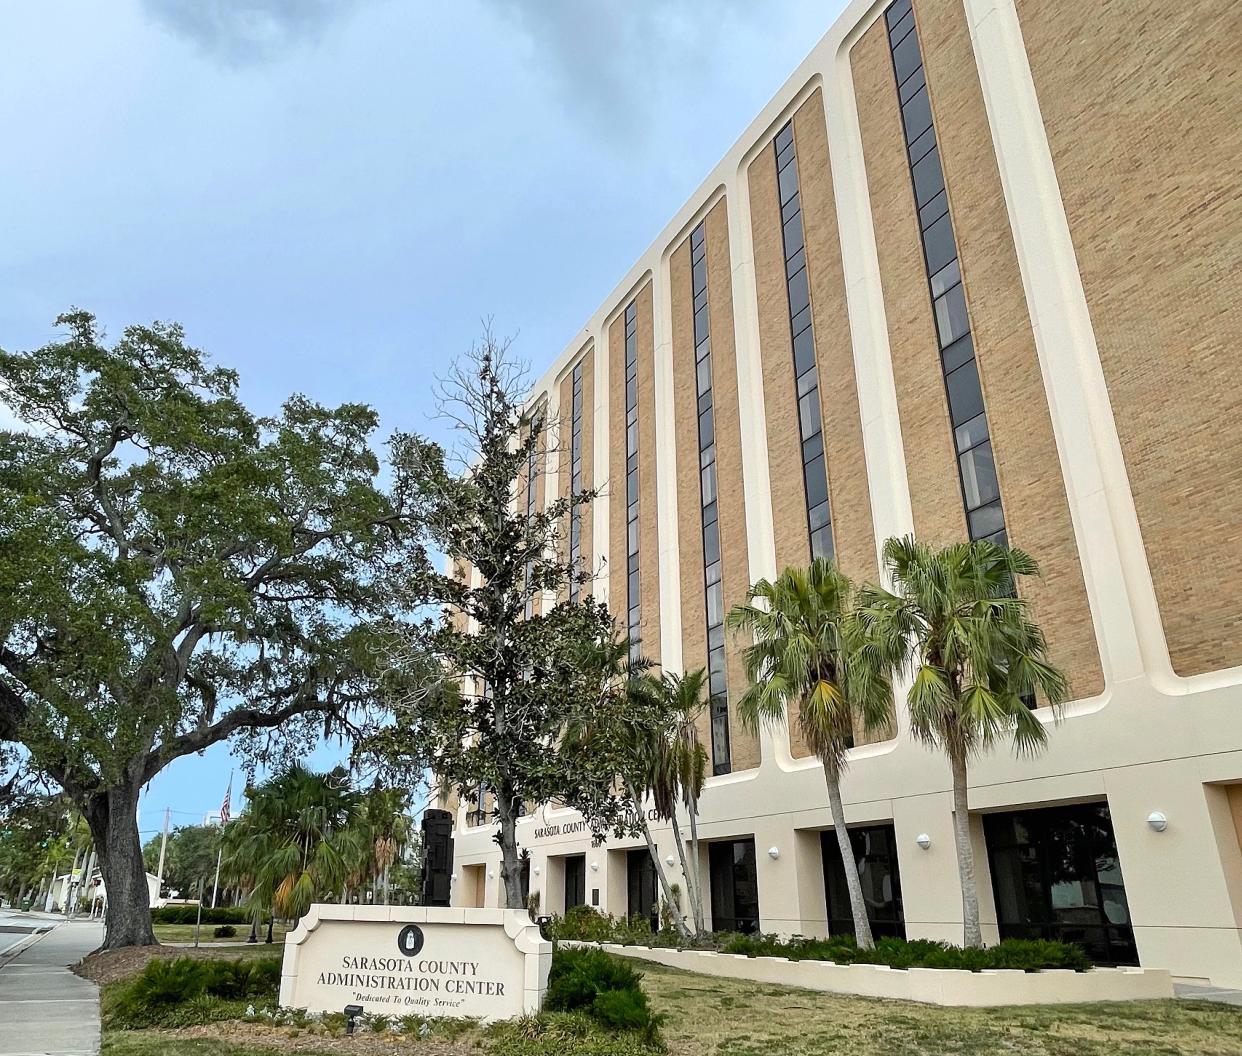 The Sarasota County administration building, located at 1600 Ringling Blvd., Sarasota.